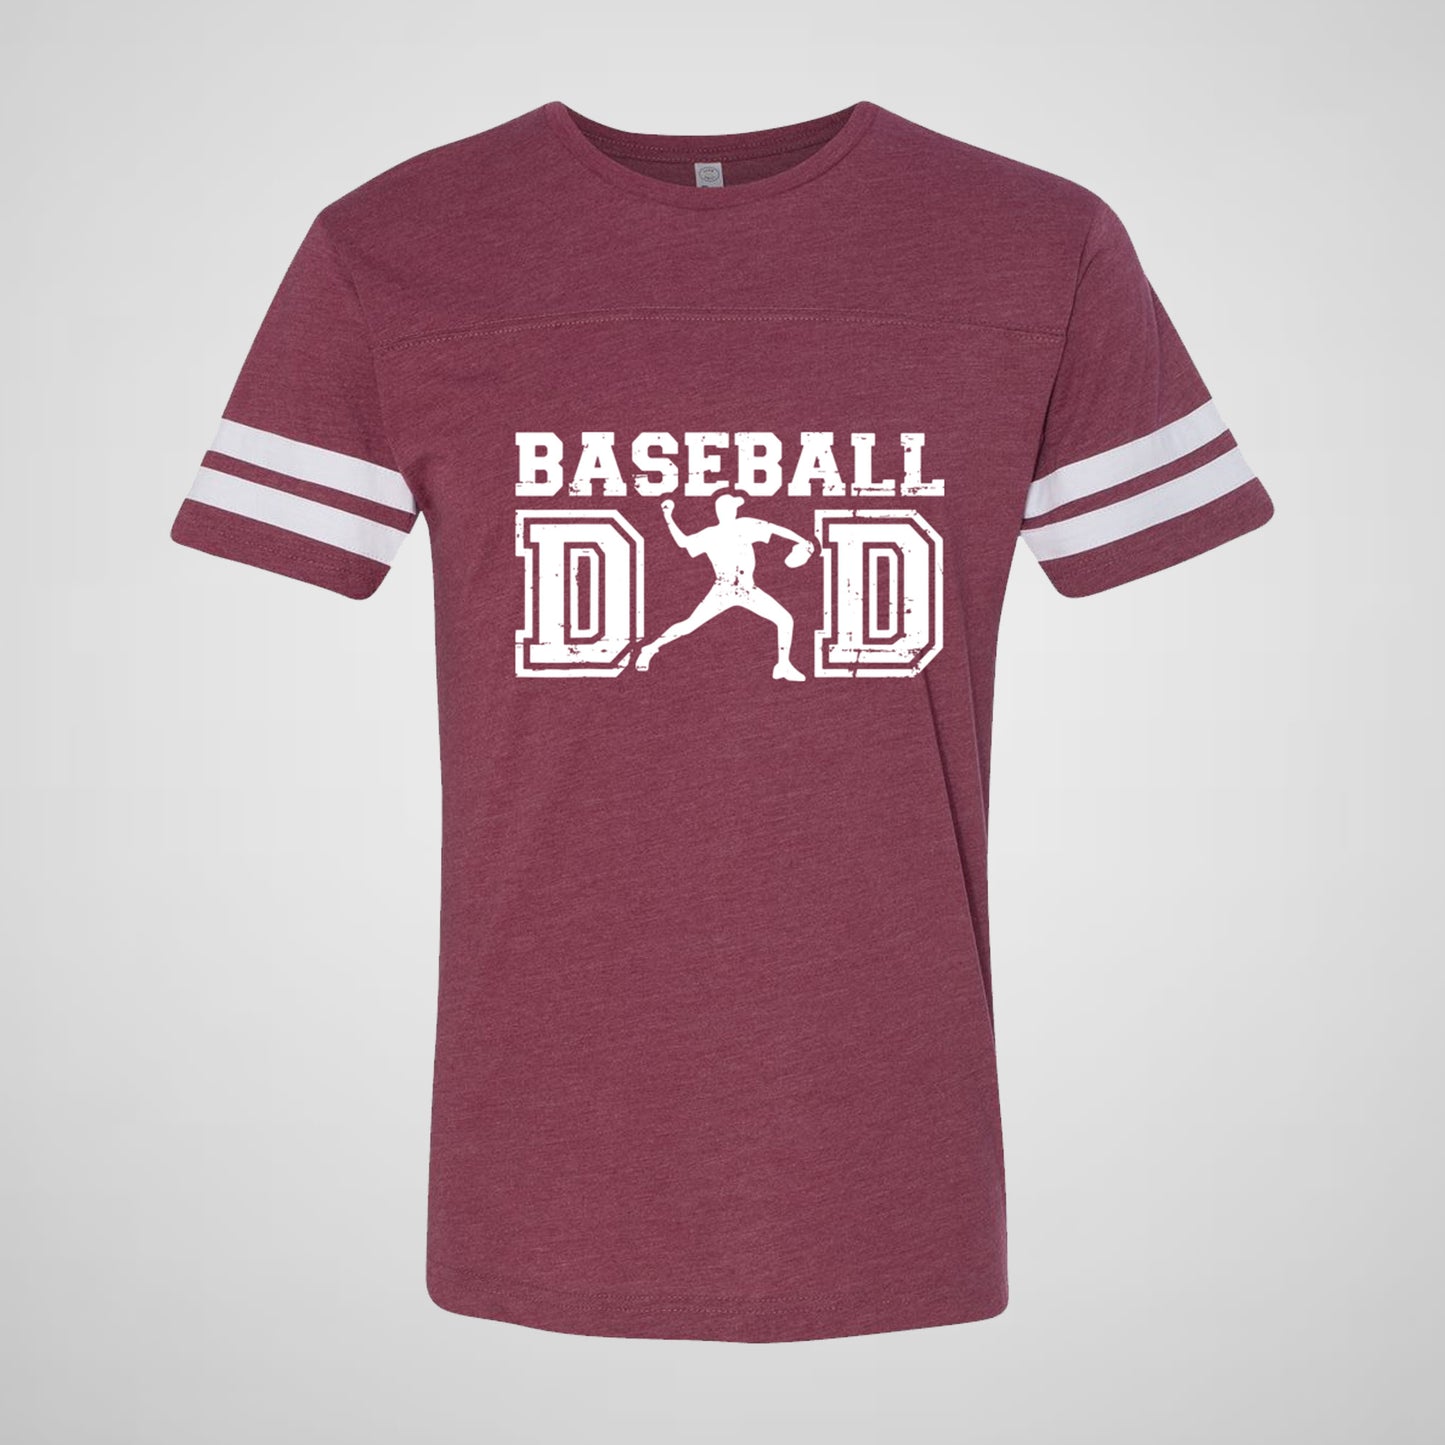 Baseball Dad - Adult Unisex Cotton/Poly Football Tee